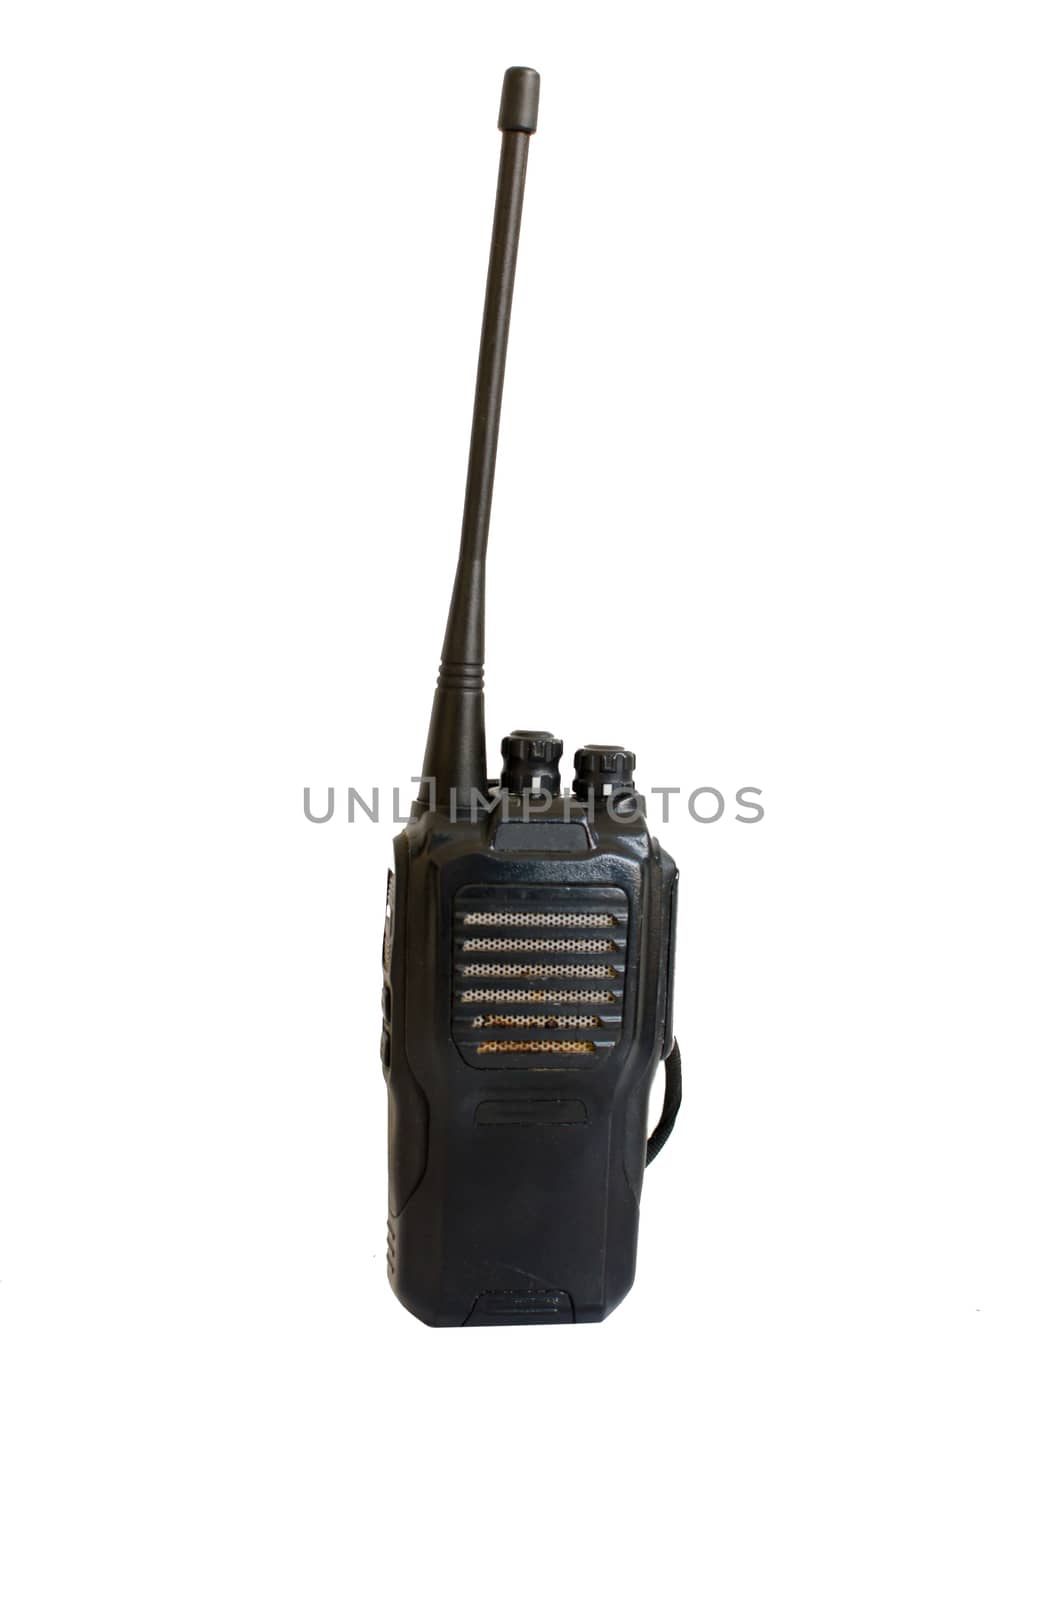 Radio Communications by aoo3771